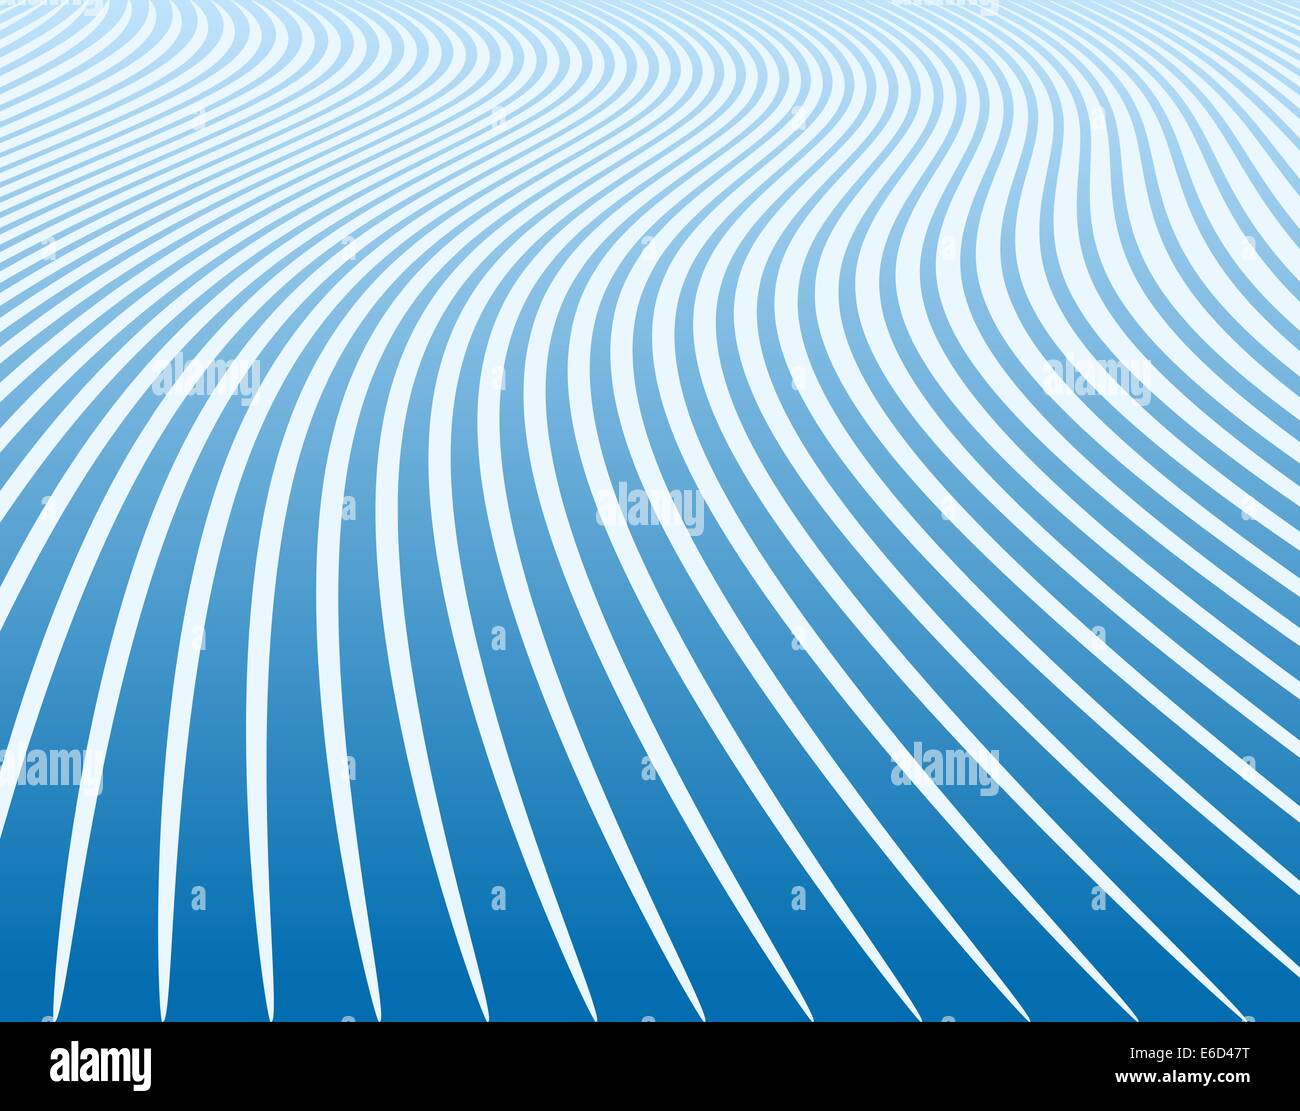 Editable vector illustration of a blue stripe pattern Stock Vector